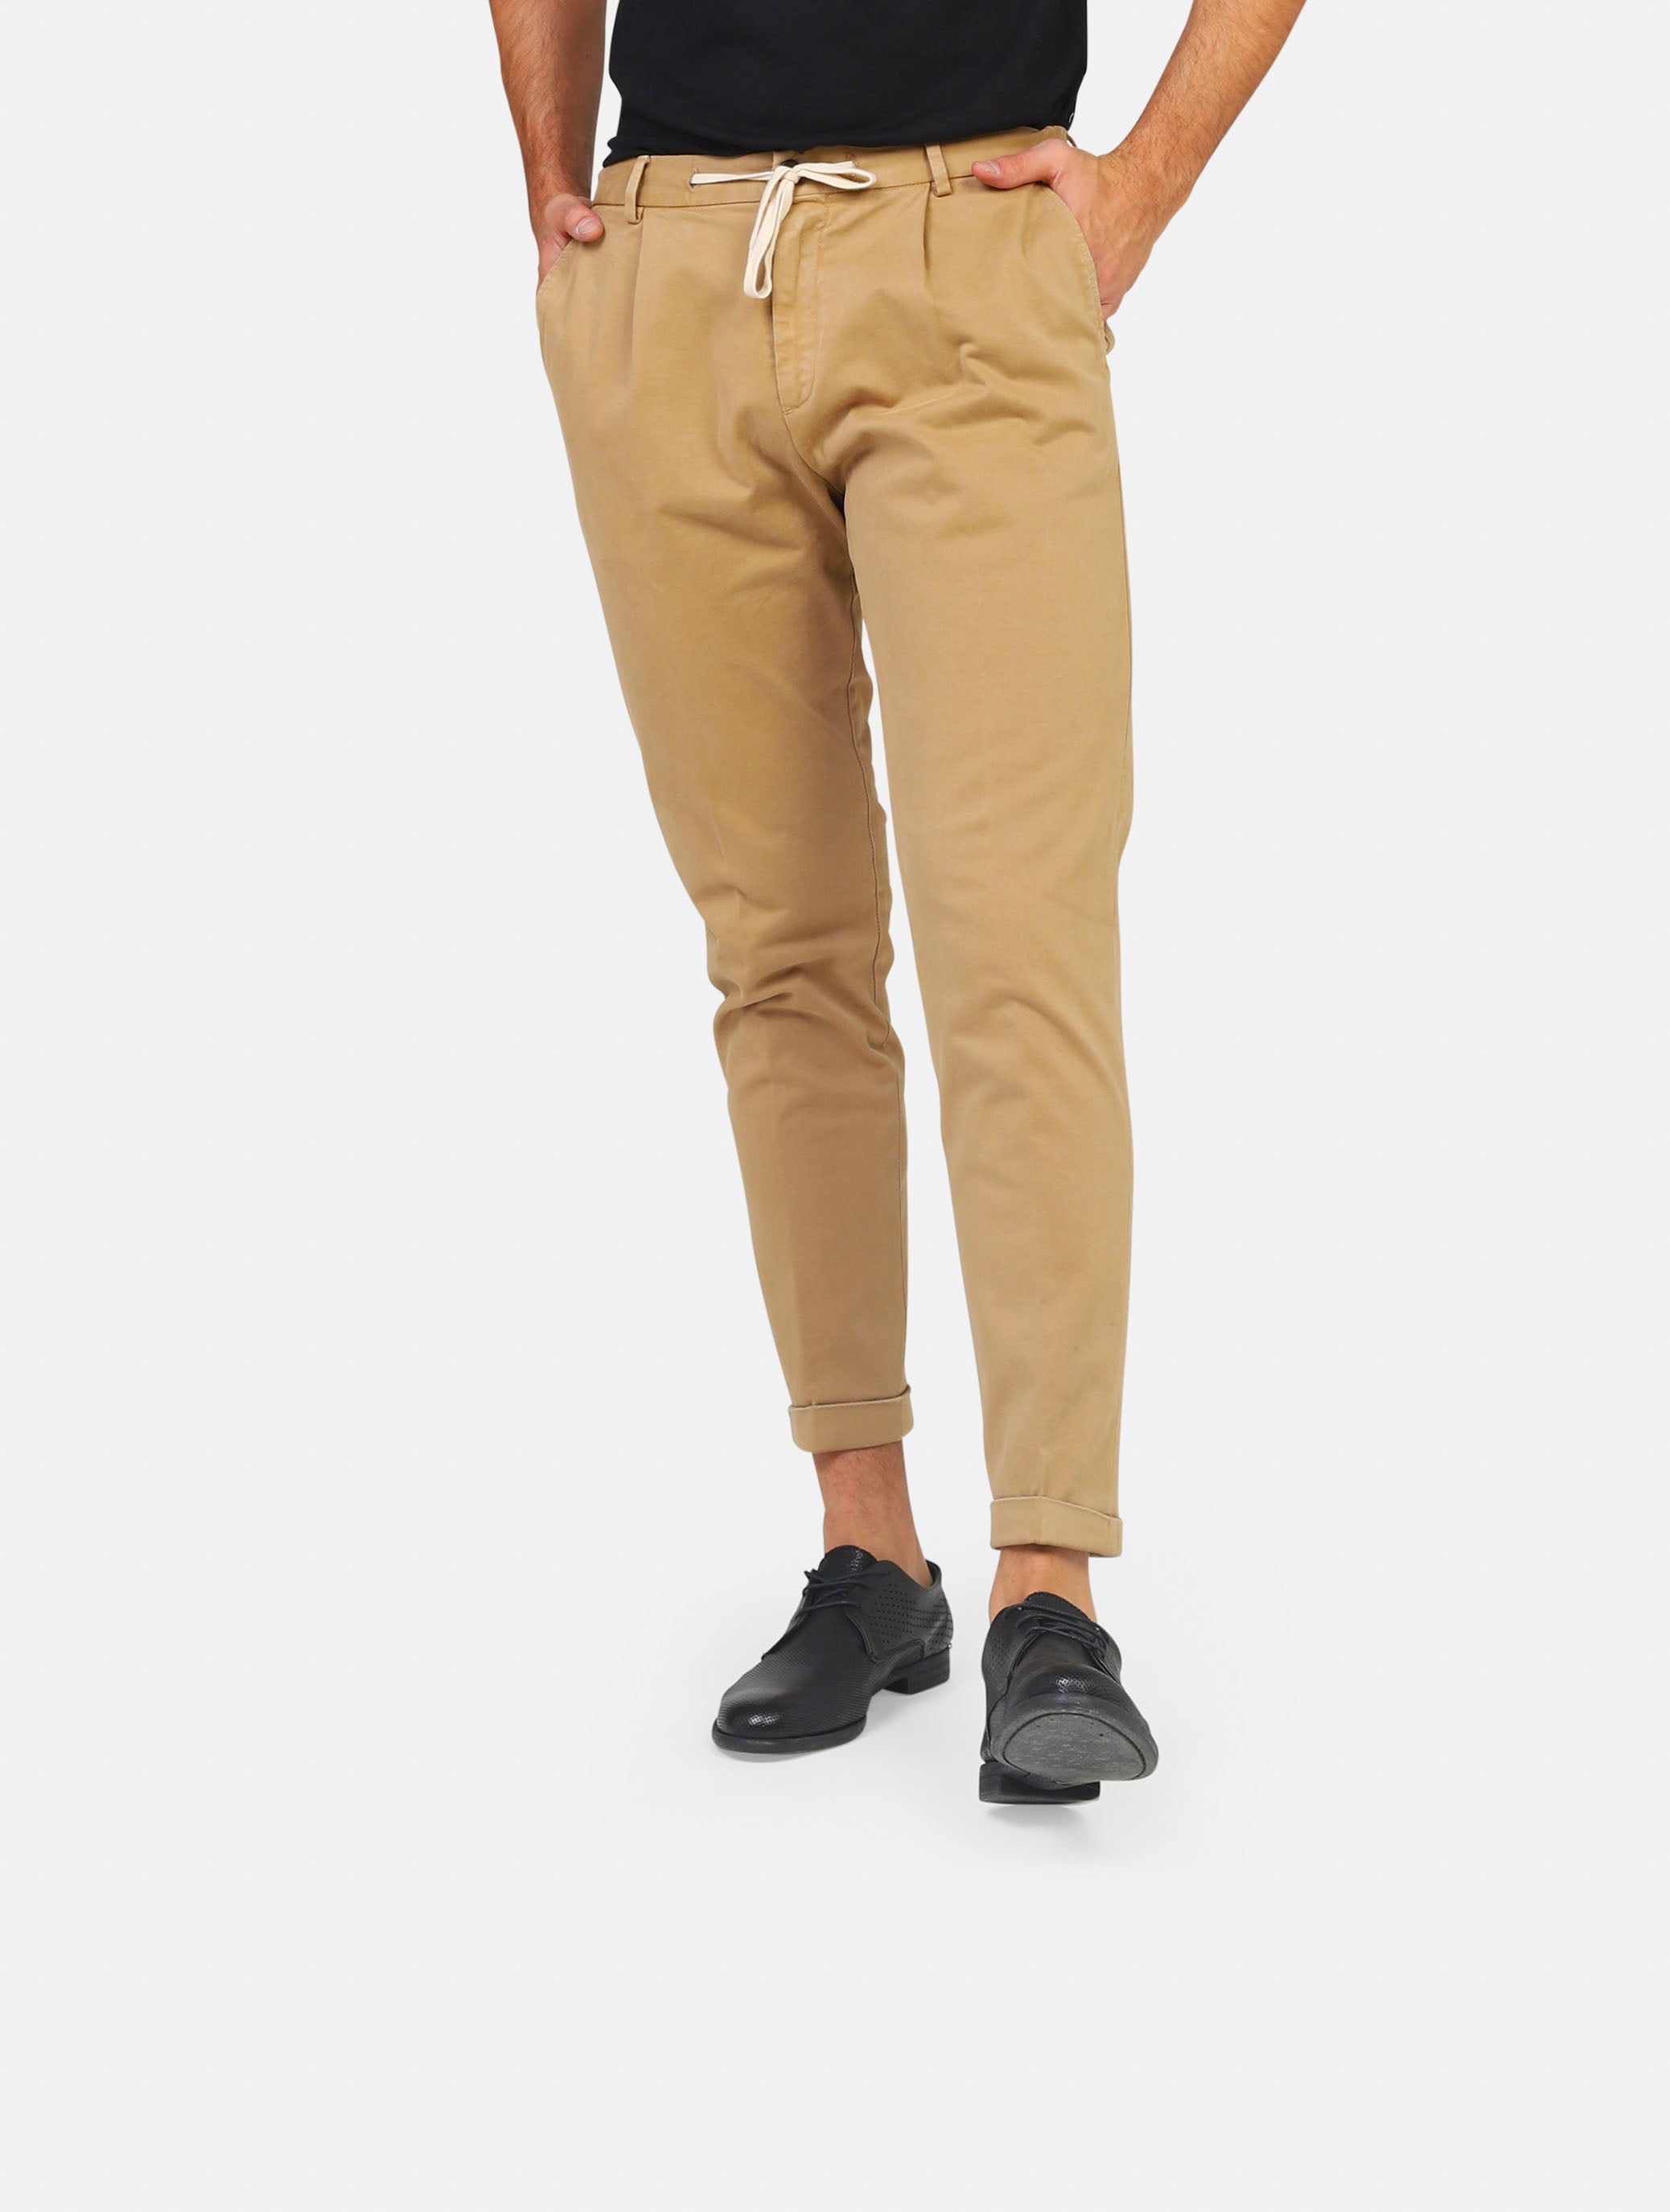 Pantalone outfit -  camel uomo 